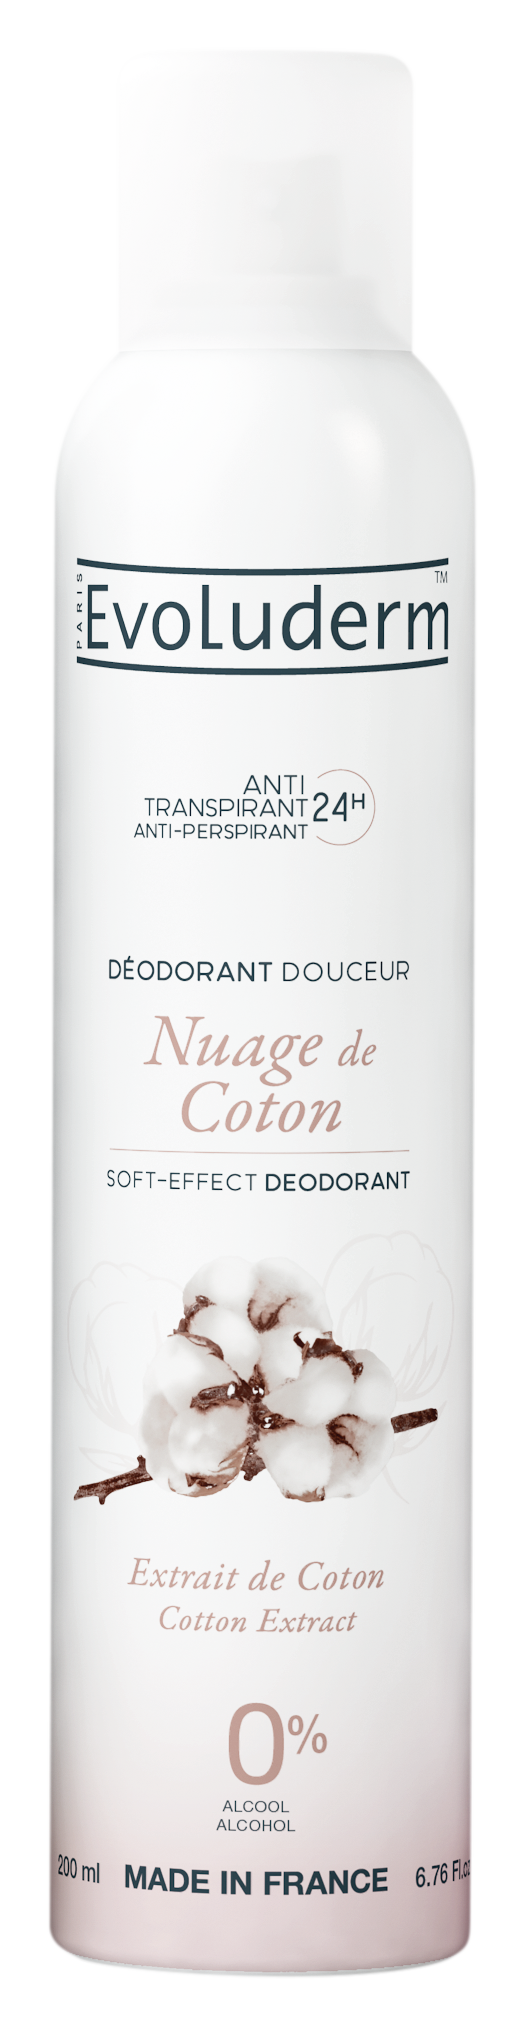 Déodorant Douceur Anti-Transpirant Nuage de Coton evoluderm 200ml